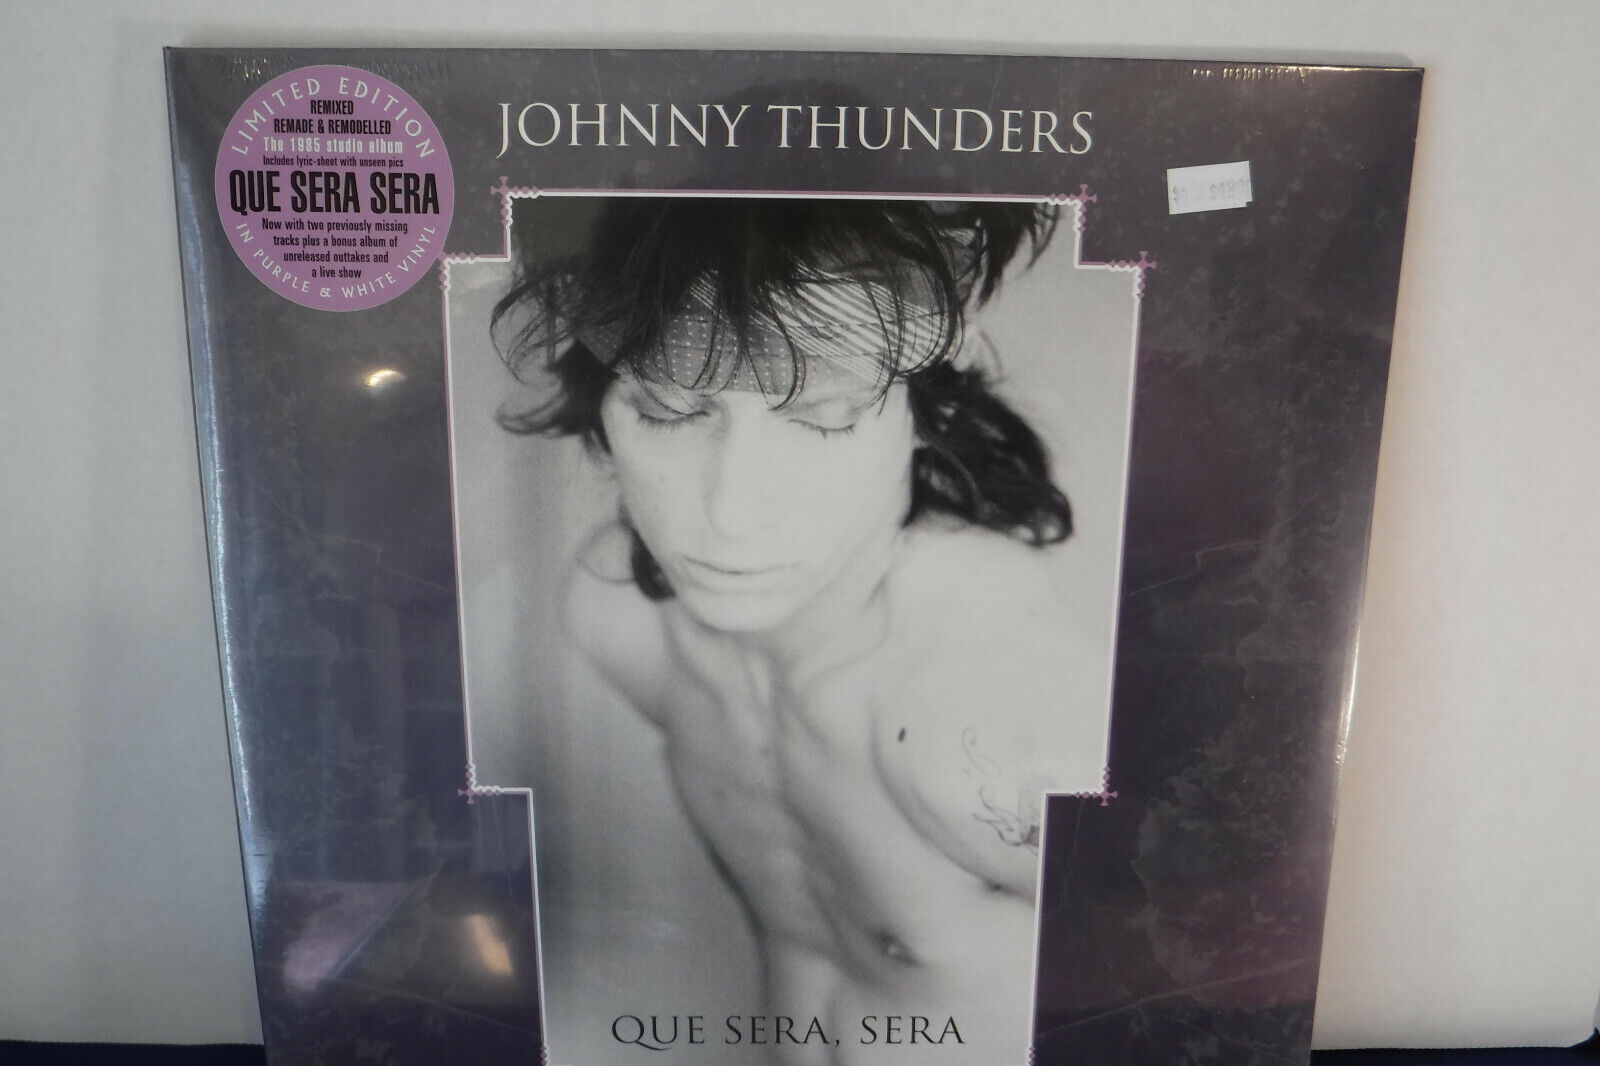 Johnny Thunders, Que Sera Resurrection, FREUDLP129, RSD 2019 SEALED,2 LPs Ltd Ed